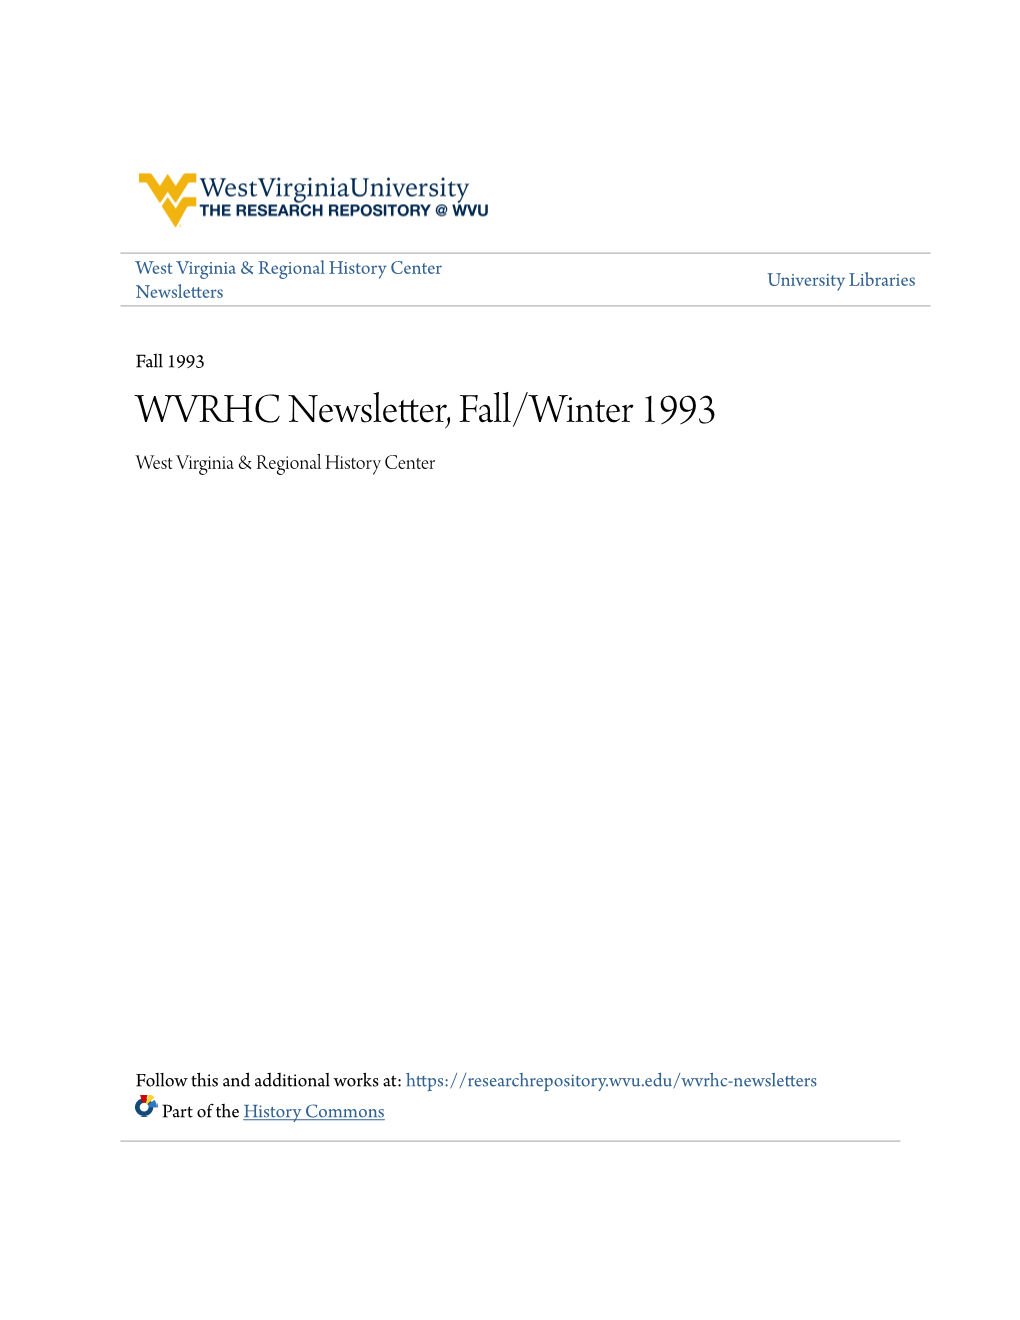 WVRHC Newsletter, Fall/Winter 1993 West Virginia & Regional History Center